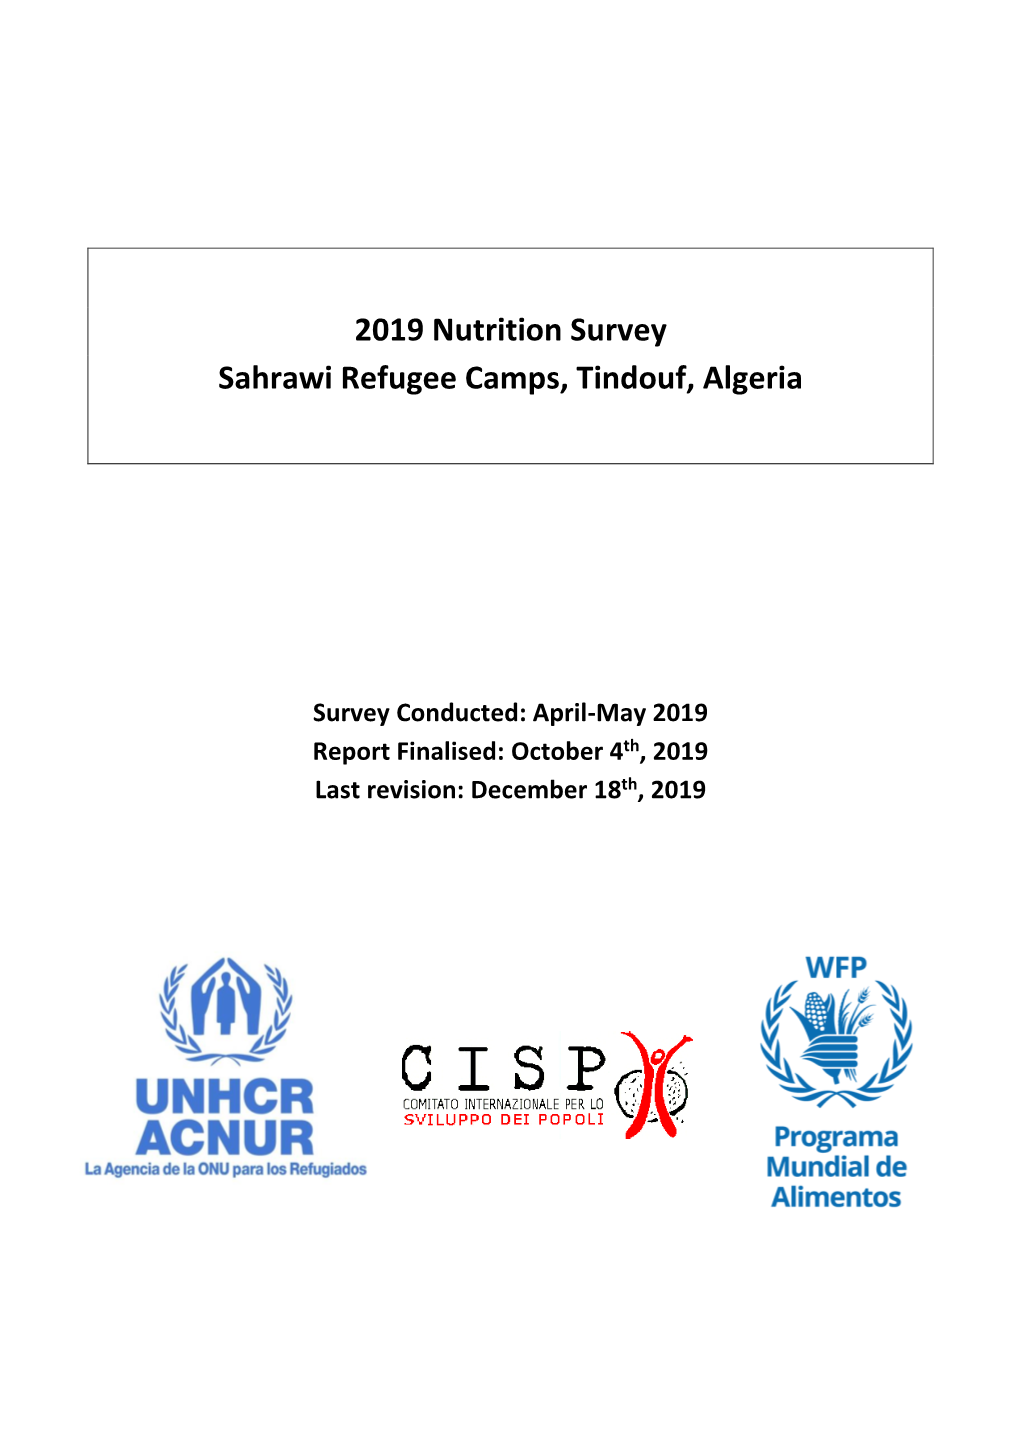 2019 Nutrition Survey Sahrawi Refugee Camps, Tindouf, Algeria